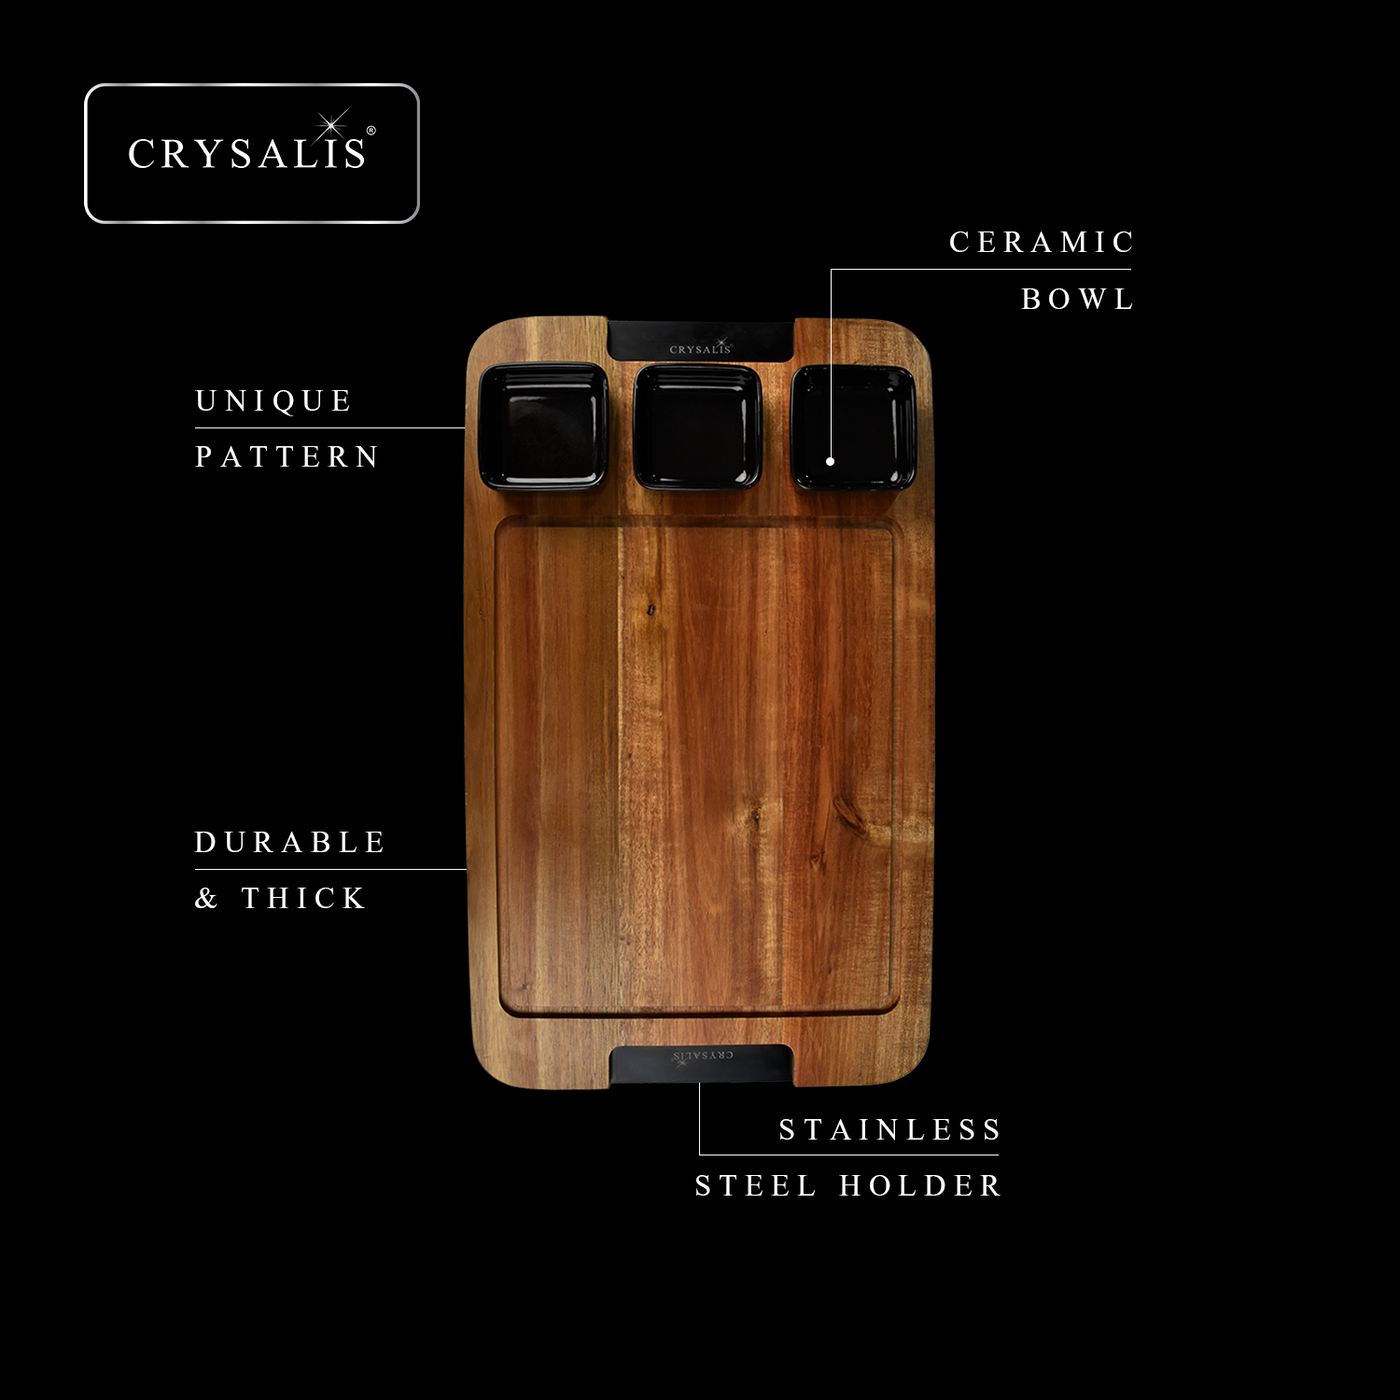 CRYSALIS Premium Serving Board [Set of 4] Charcuterie Tray - Acacia Wood